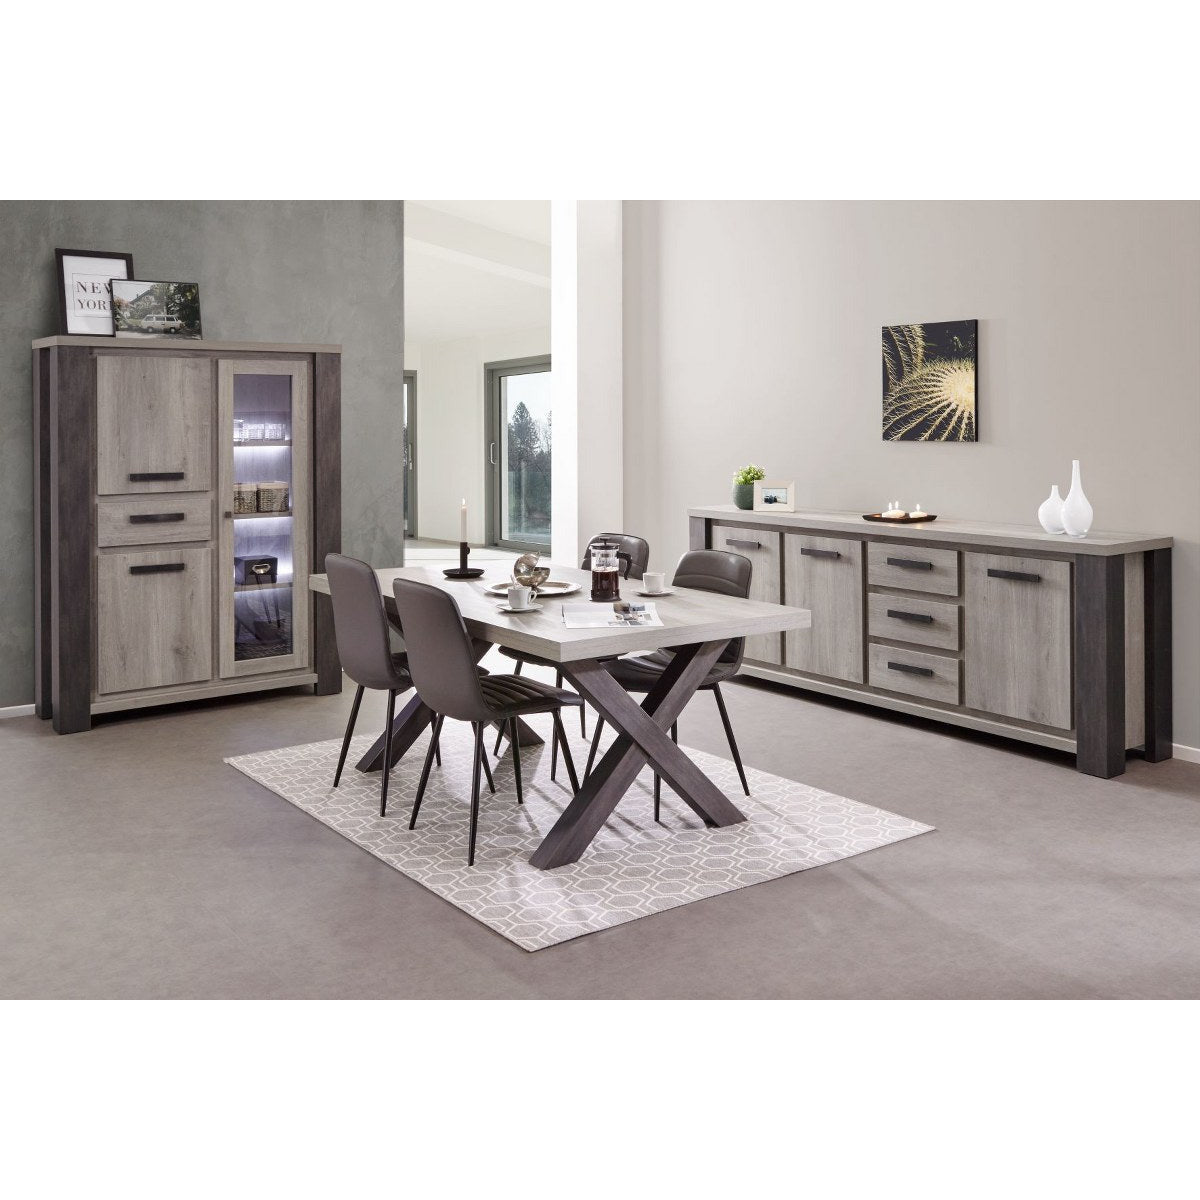 Dresser | Furniture series Annatheo | natural, gray, black